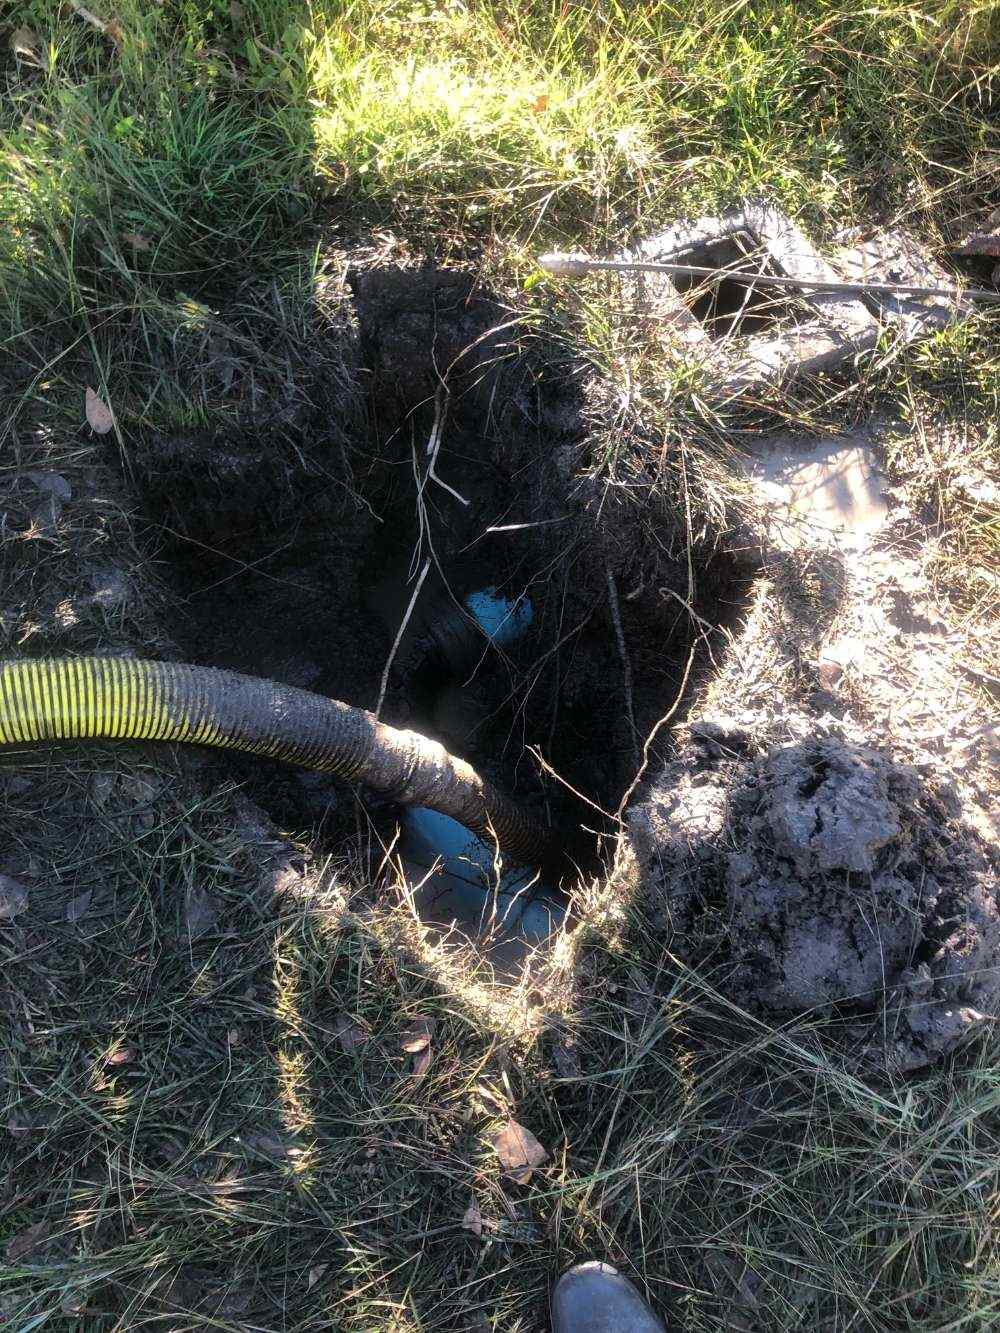 Burst pipe 1- Emergency Fix in Townsville